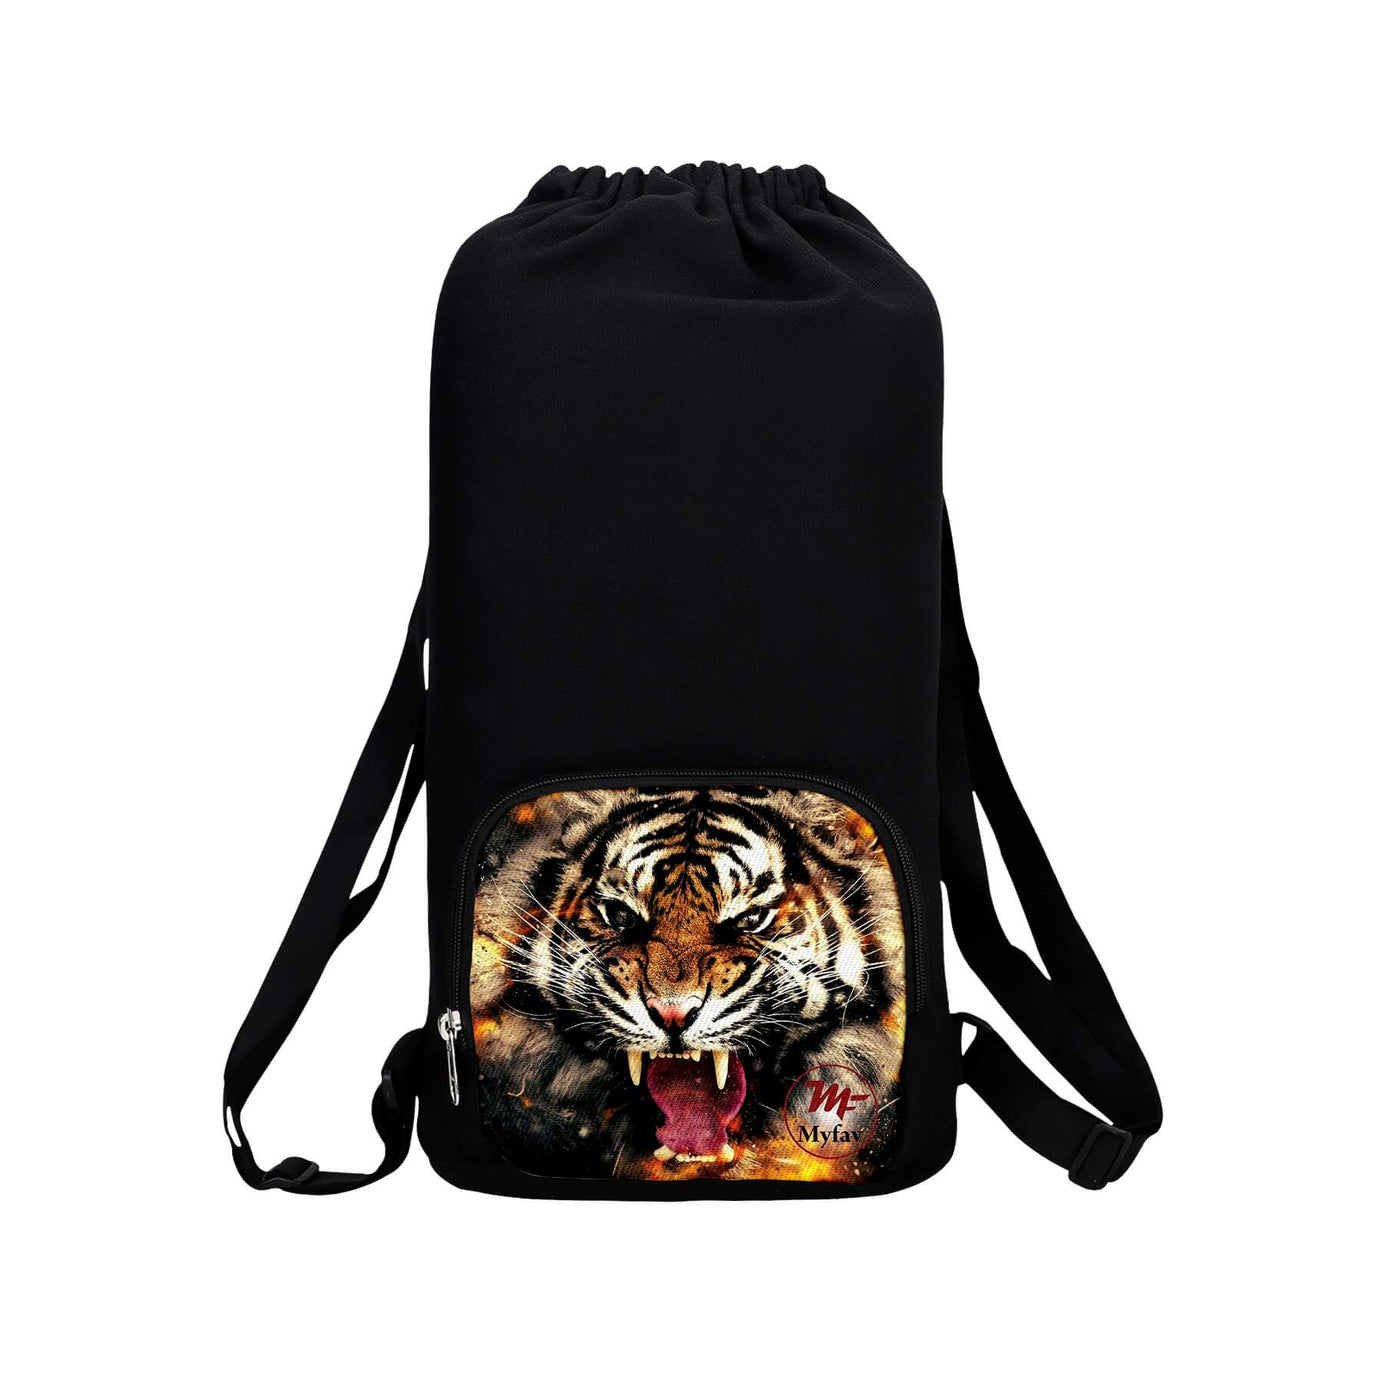 My Fav Tiger Print Cotton Canvas Tution Backpack / Exam Bag For Boys / Girls